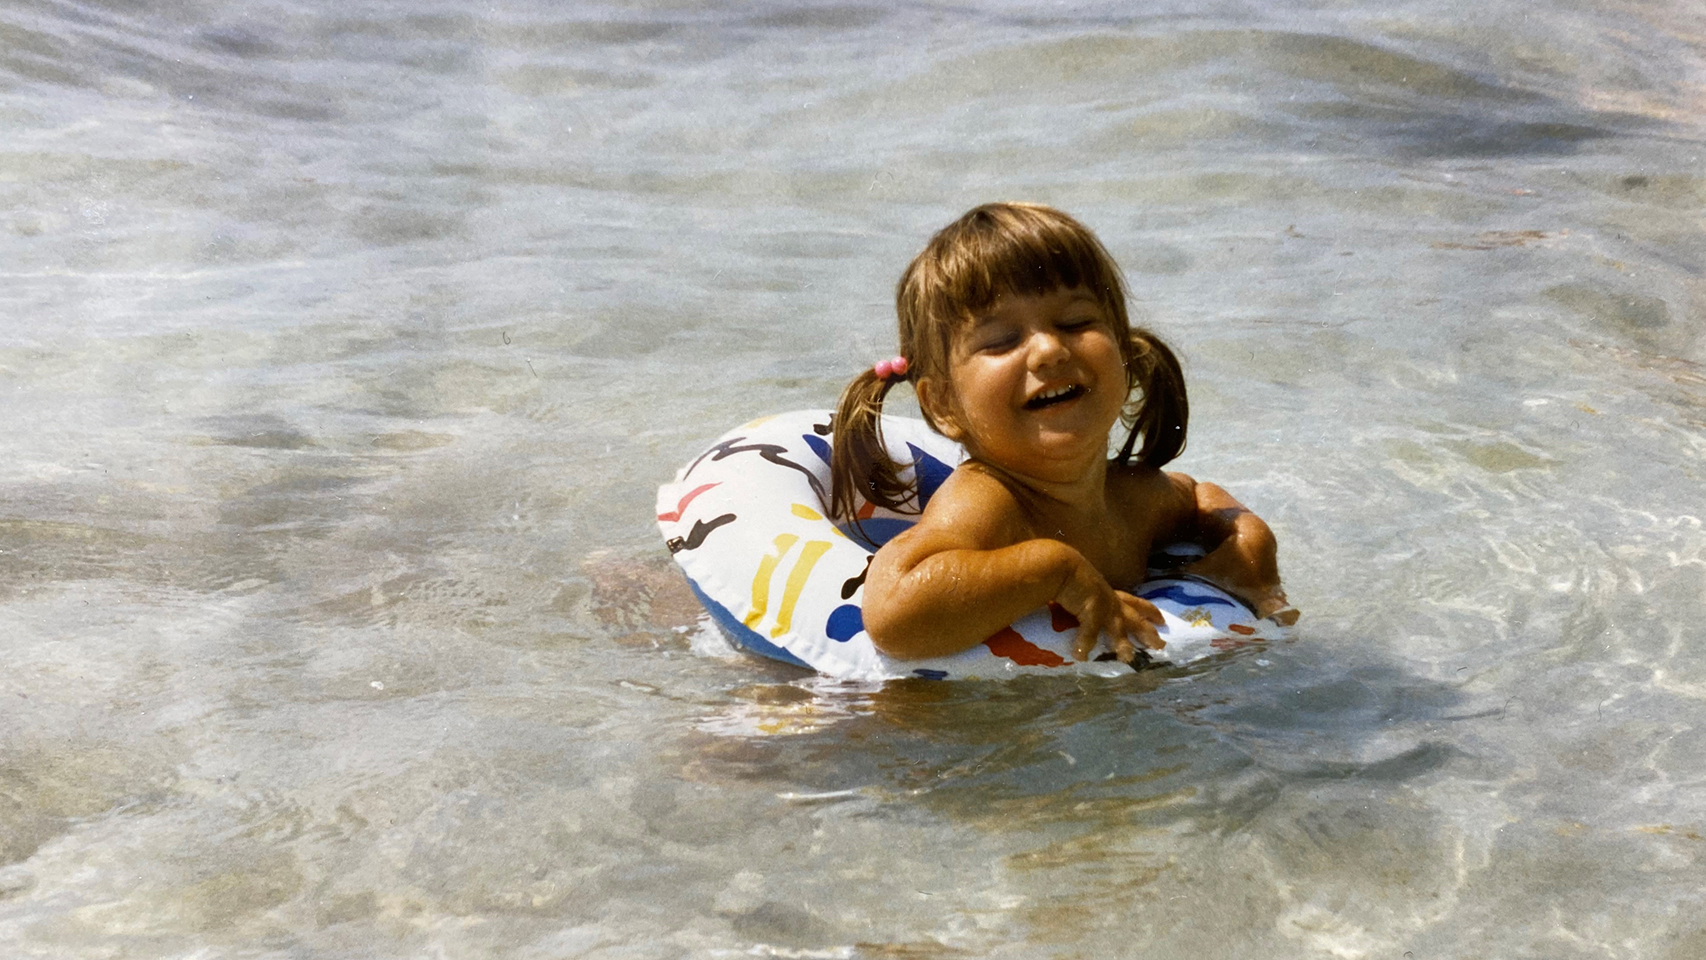 Daniela swimming as a child